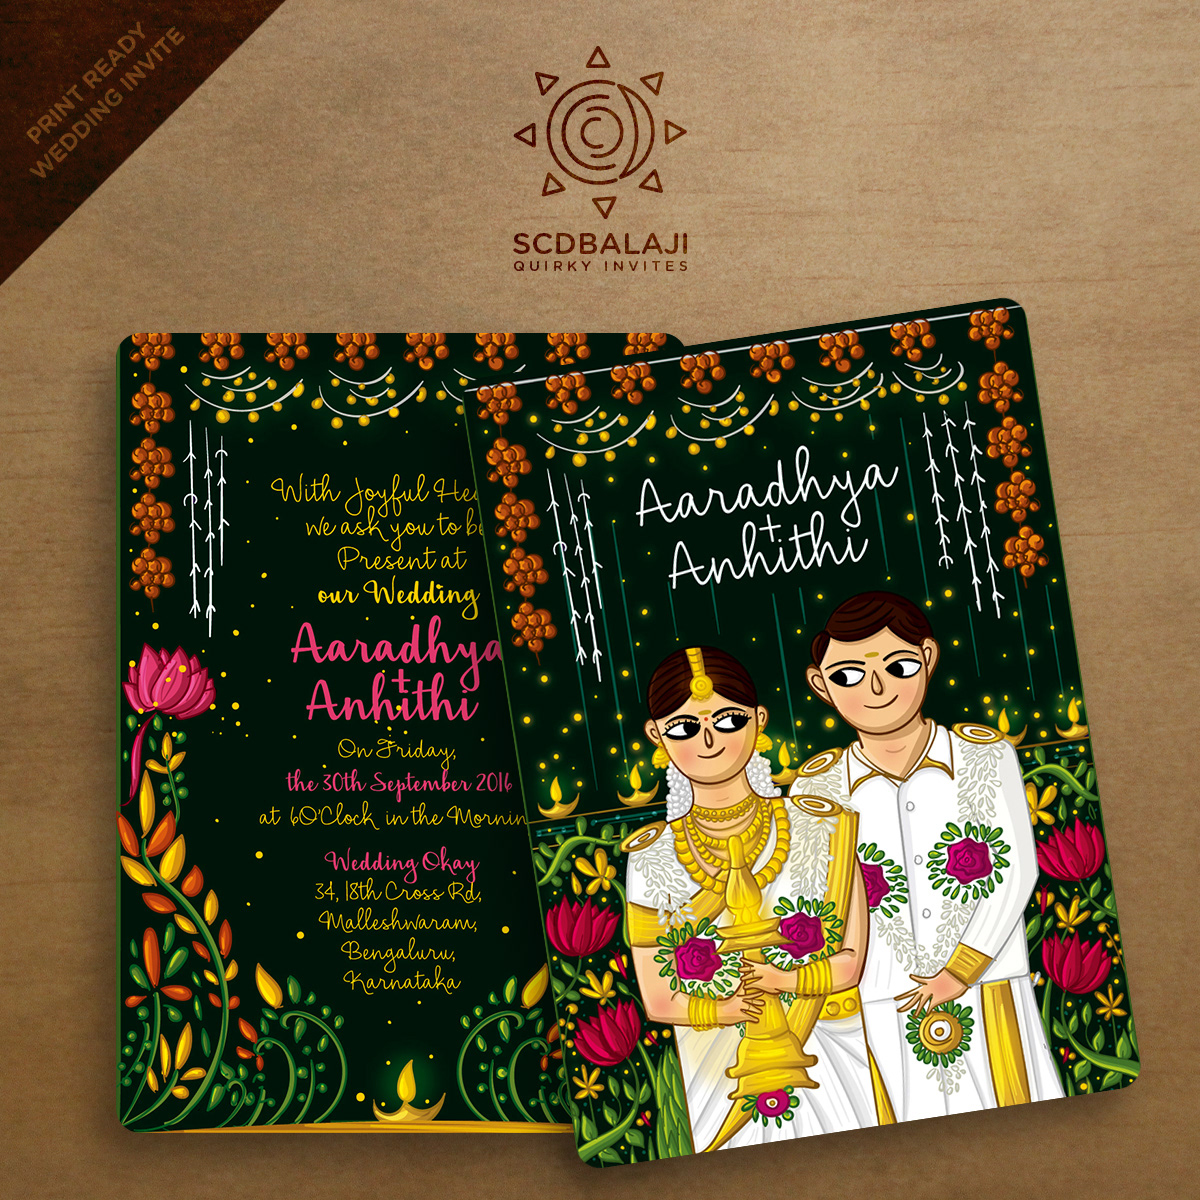 Atma Studios - Branding Studio & Illustration House, Coimbatore, India - Kerala Wedding Invitation